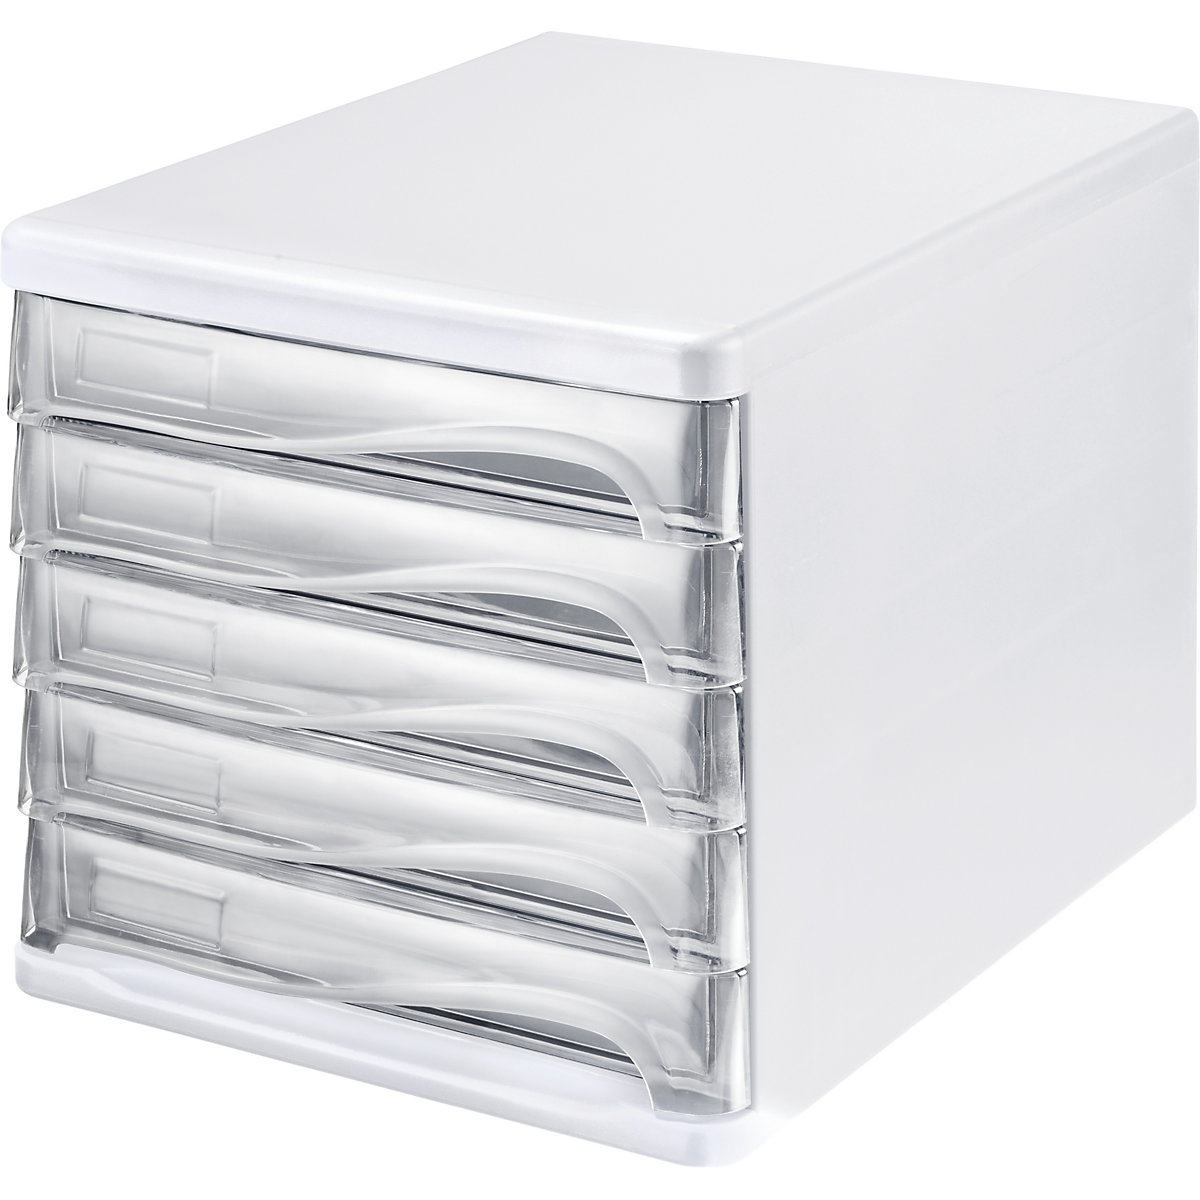 Ladebox – helit, kleur kastframe wit, VE = 4 stuks, laden glashelder-5